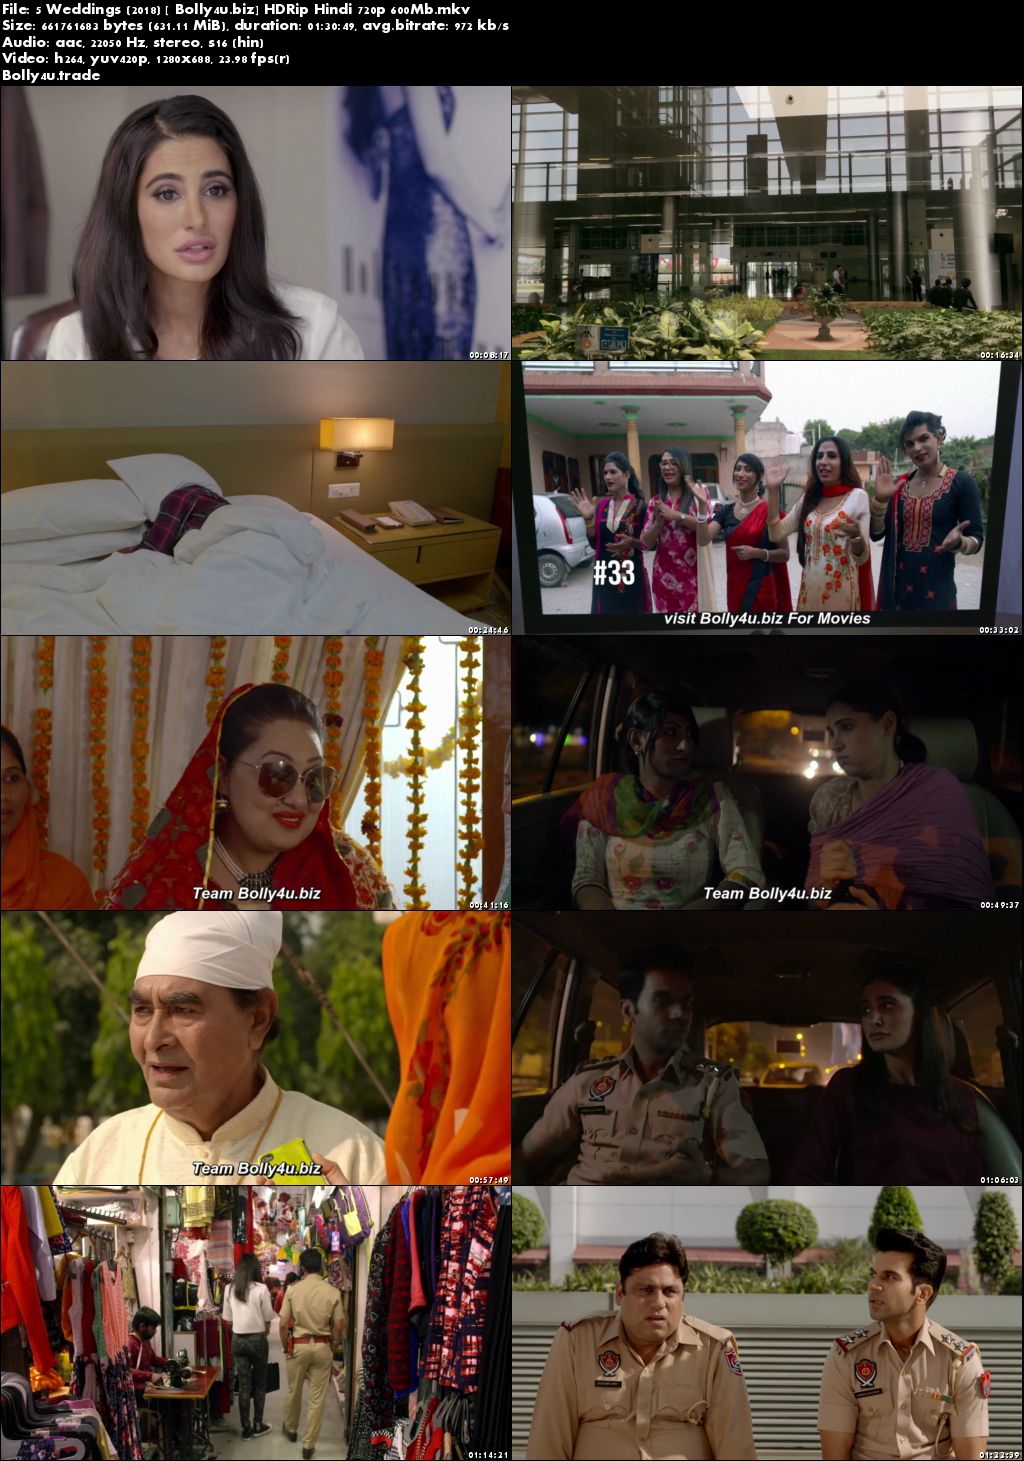 5 Weddings 2018 HDRip 600MB Full Hindi Movie Download 720p